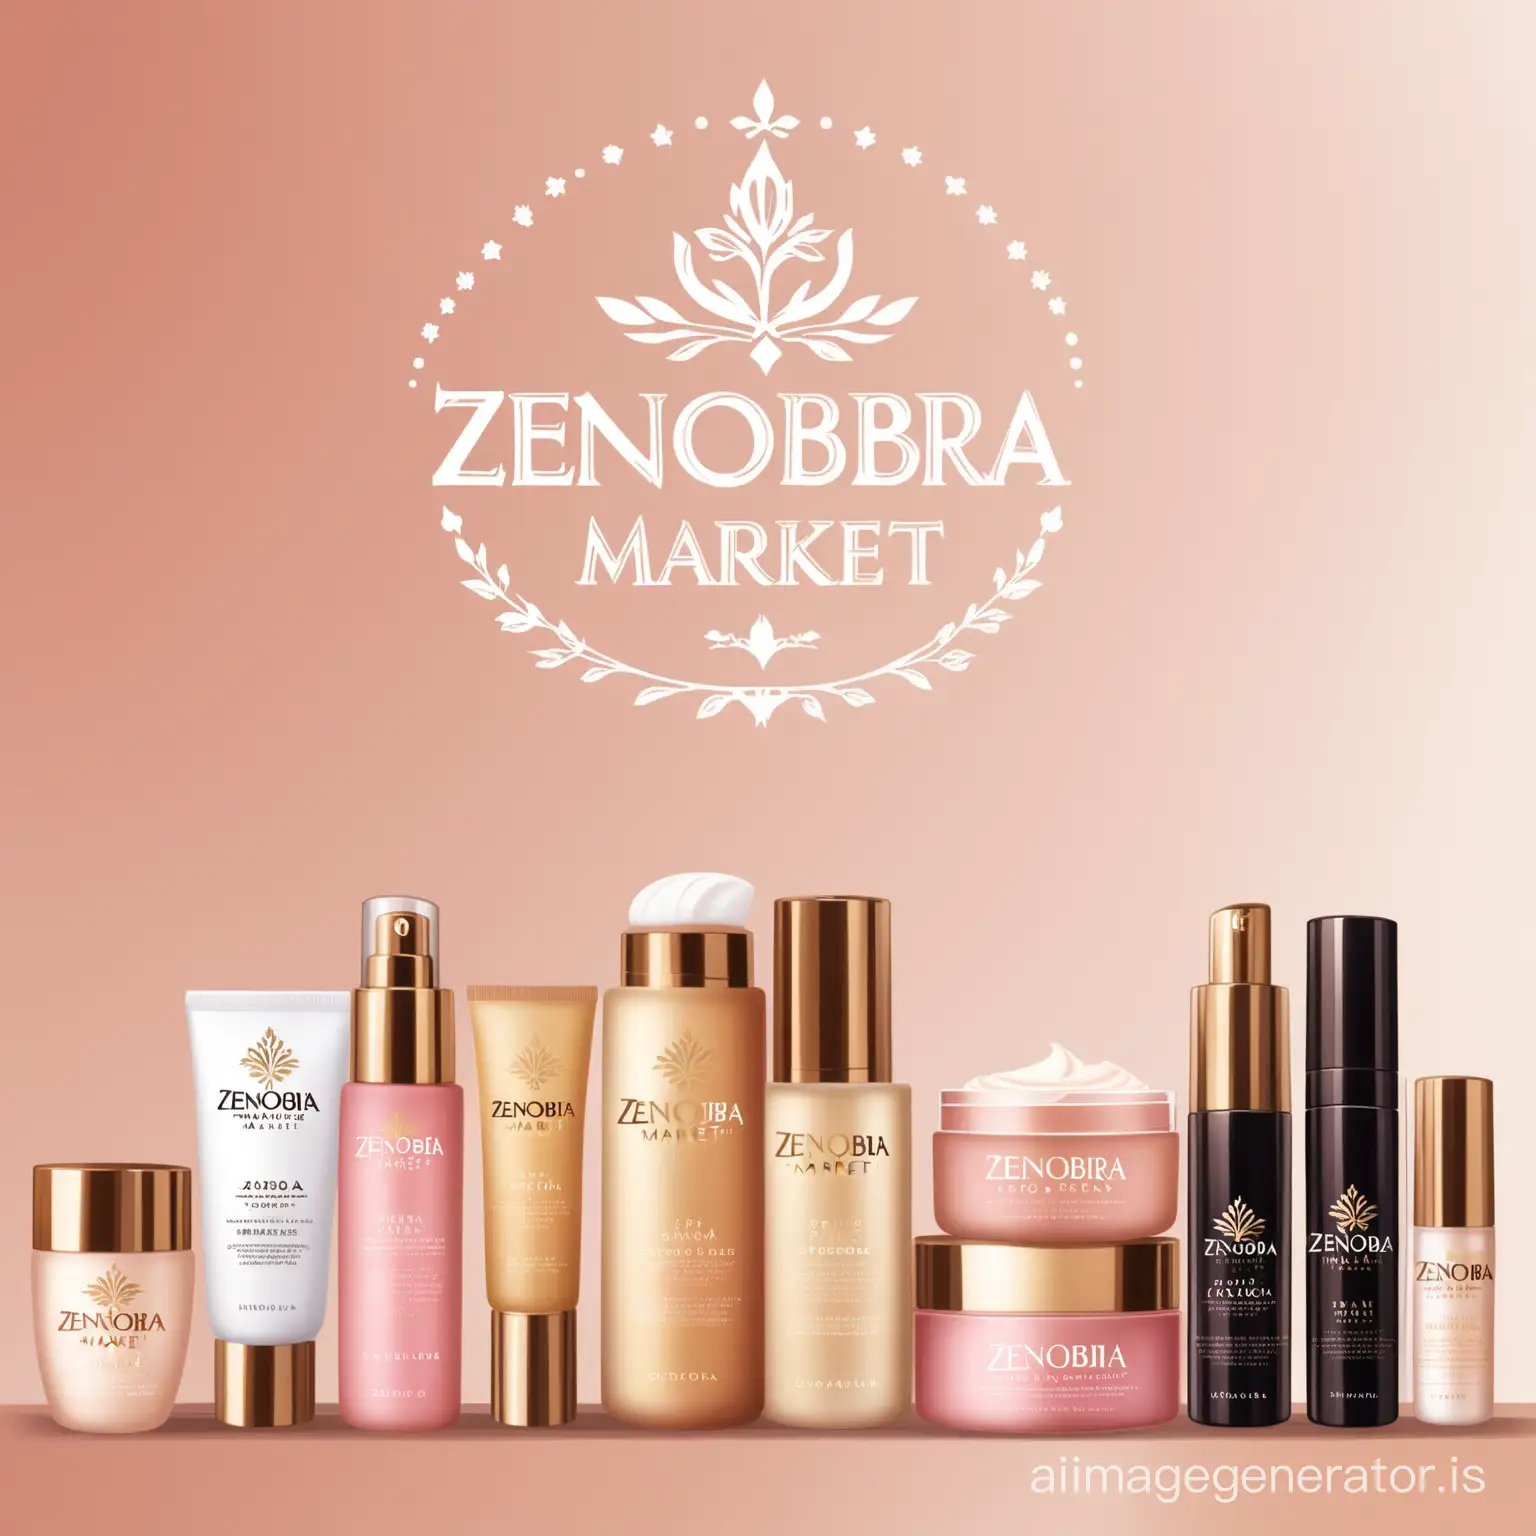 Zenobia-Market-Logo-Vibrant-Makeup-and-Skincare-Products-Showcase